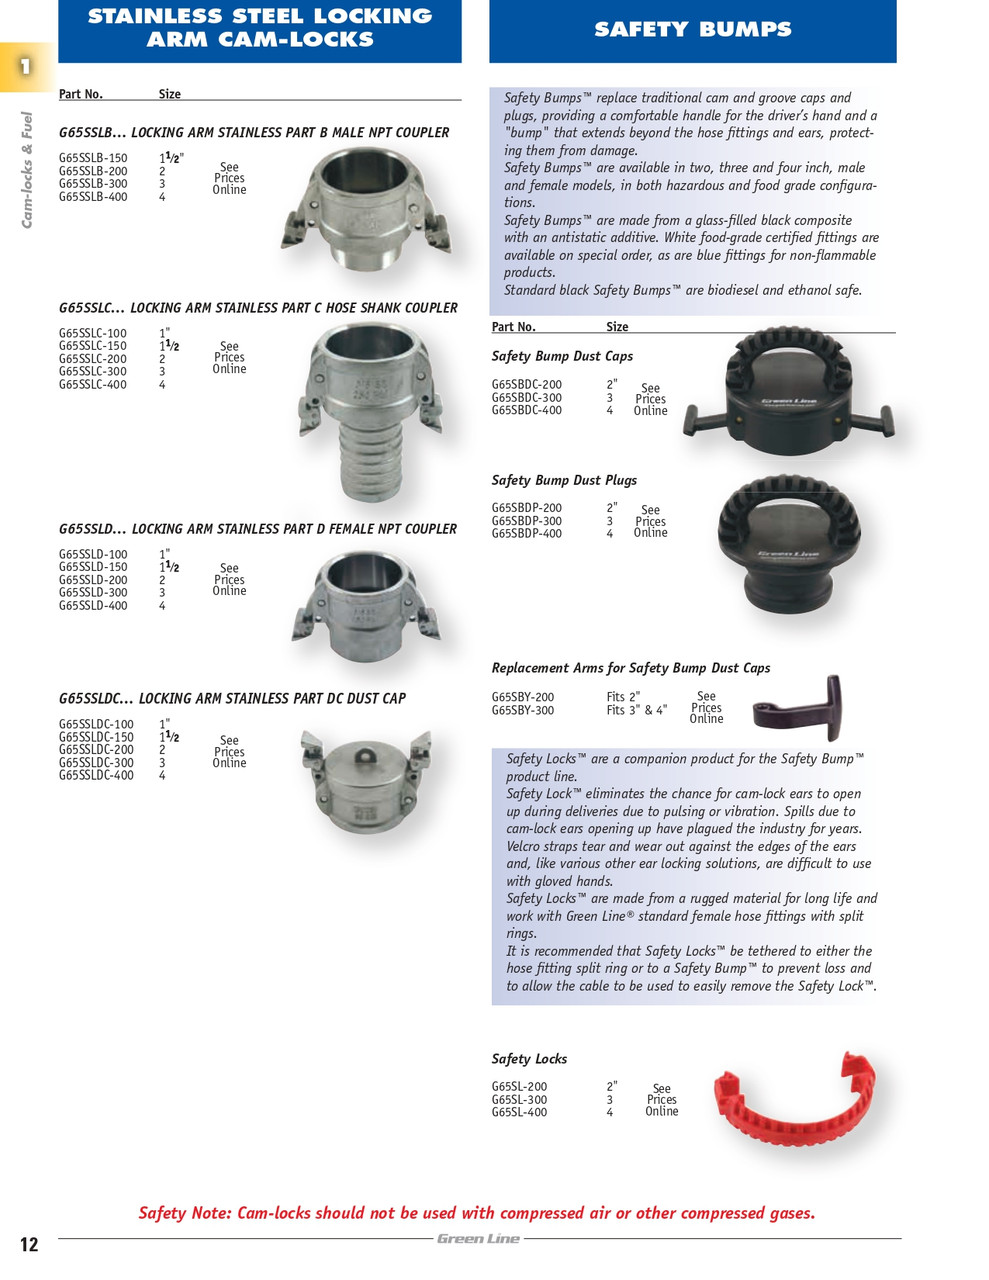 2" Safety Bump® Dust Plug  G65SBDP-200